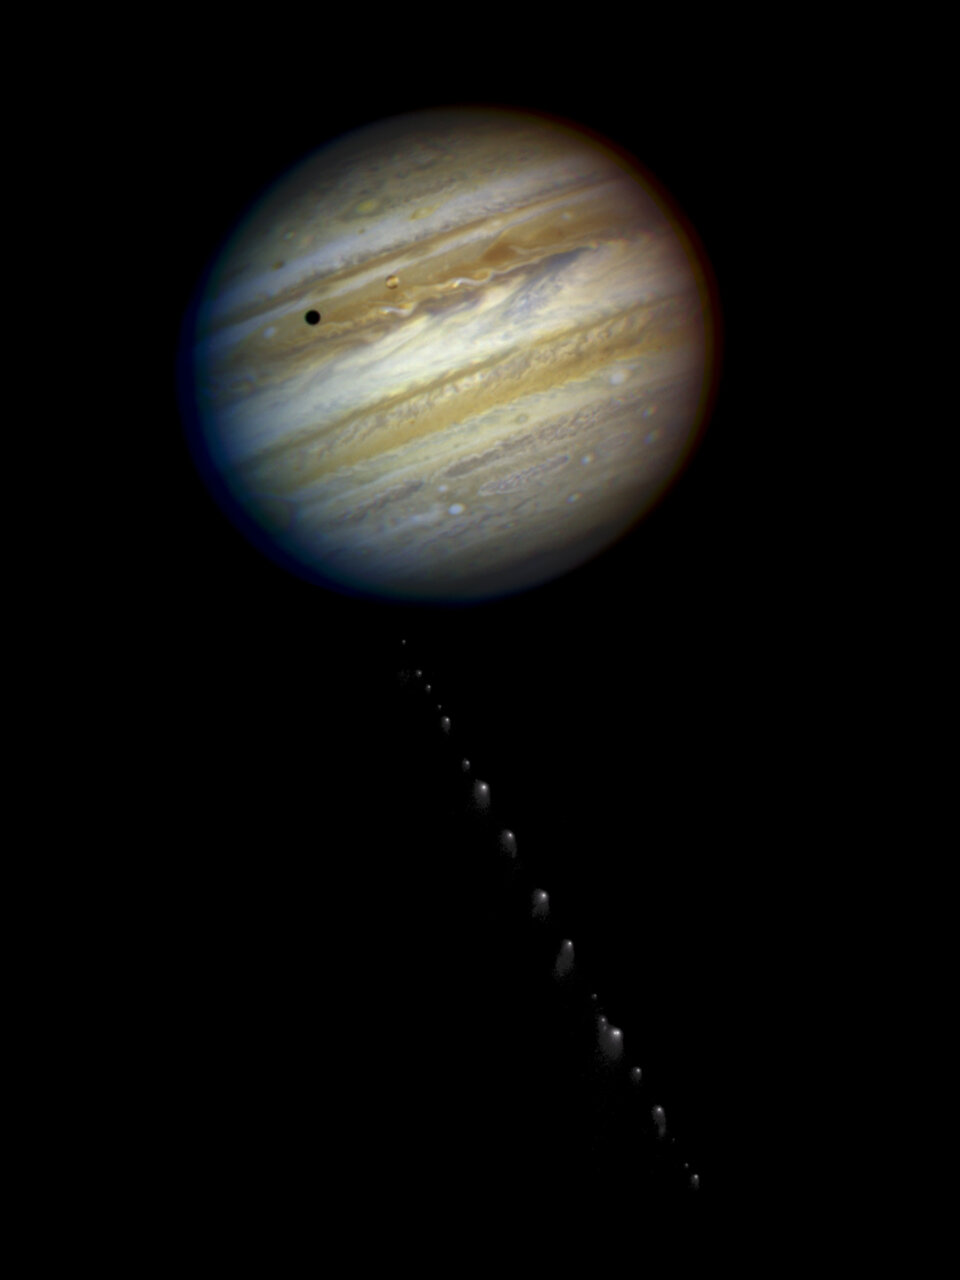 Comet Shoemaker-Levy 9 approaches Jupiter